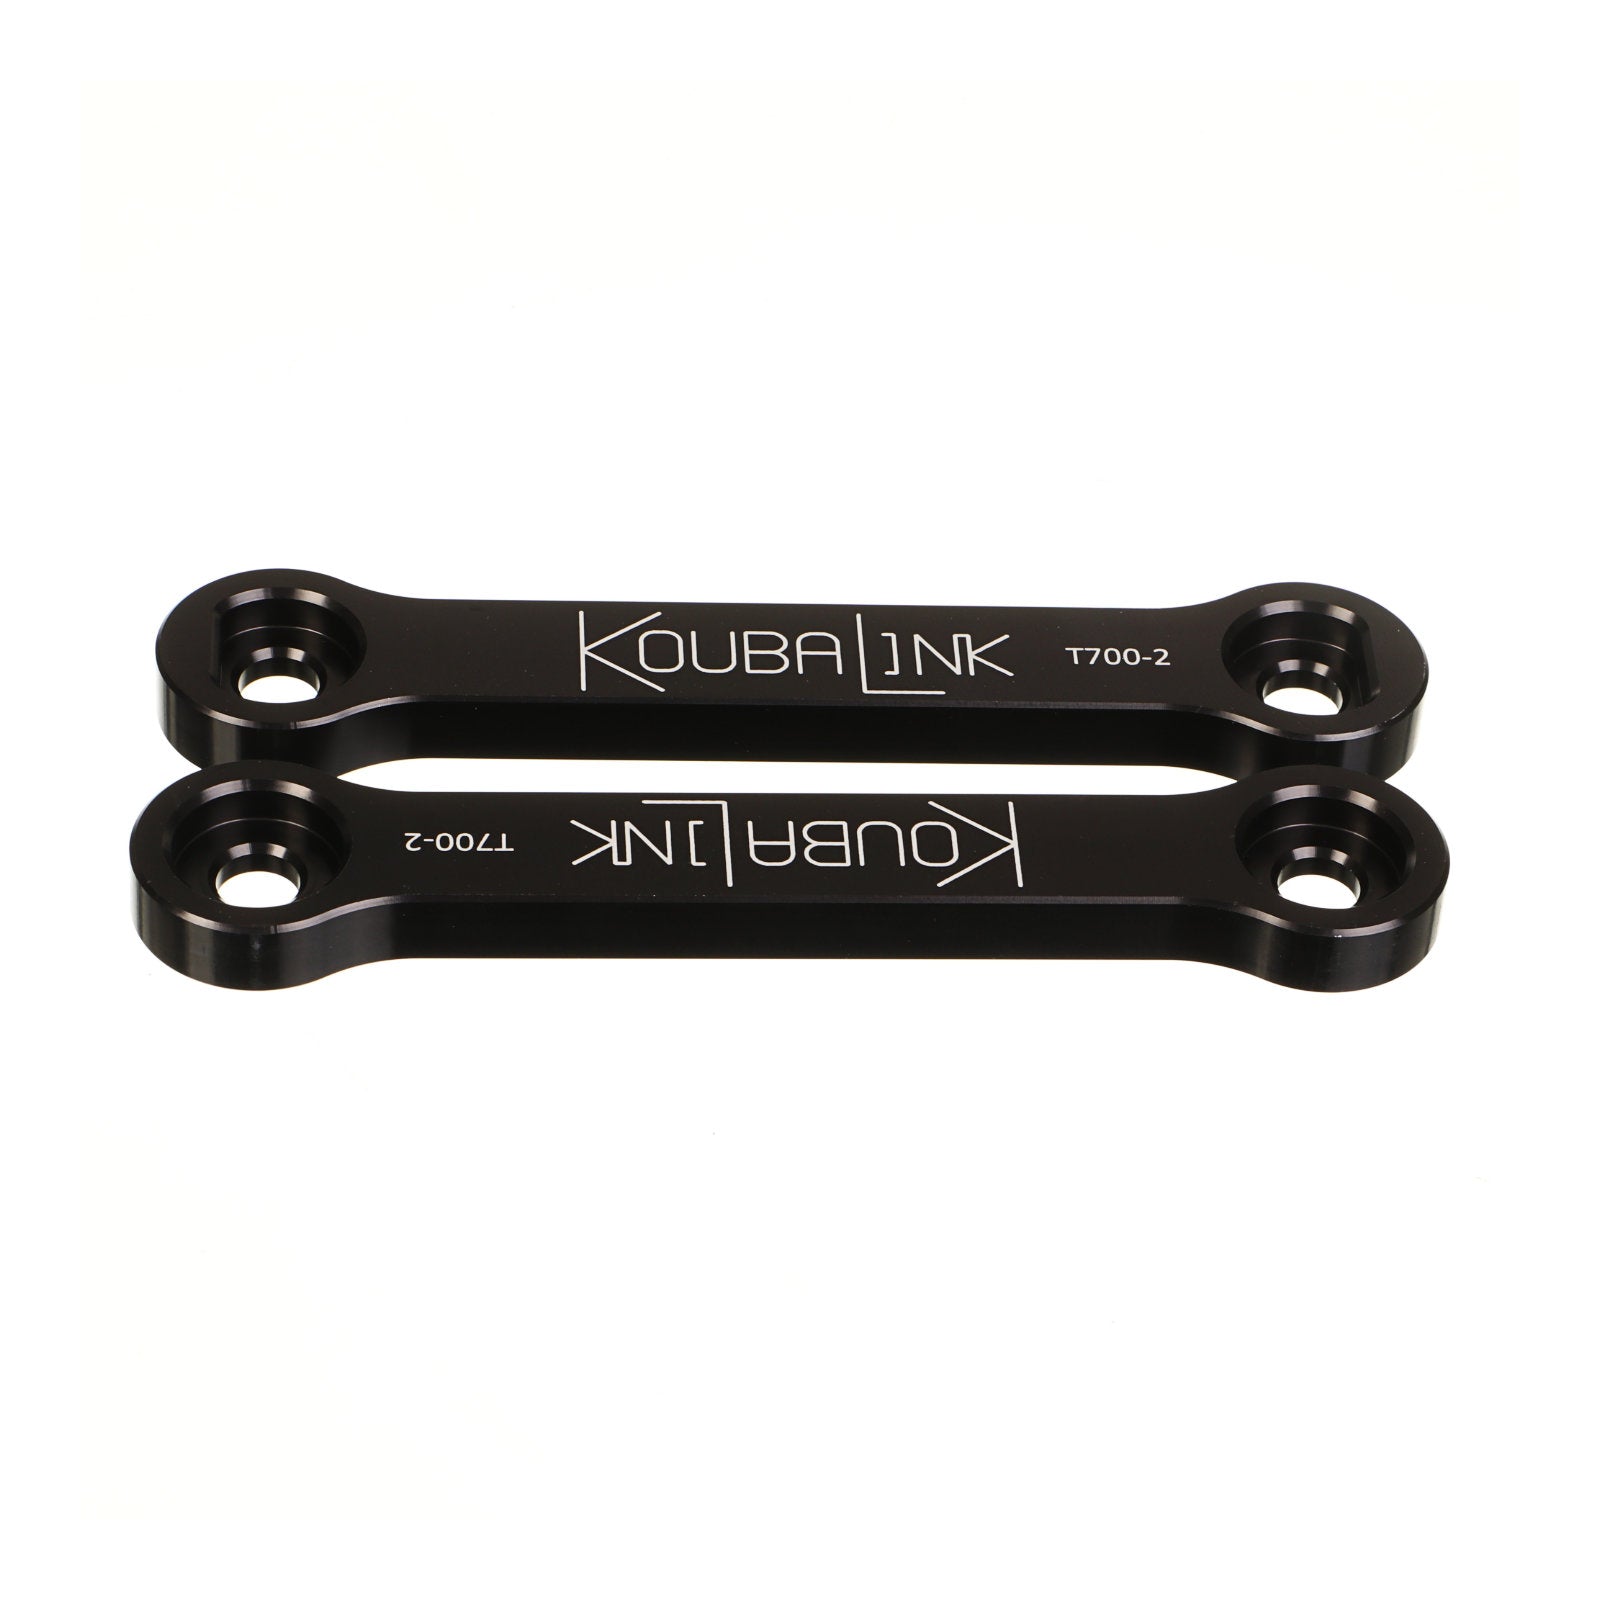 New KOUBALINK 25mm Lowering Linkage T700-2 - Black #KBLT7002